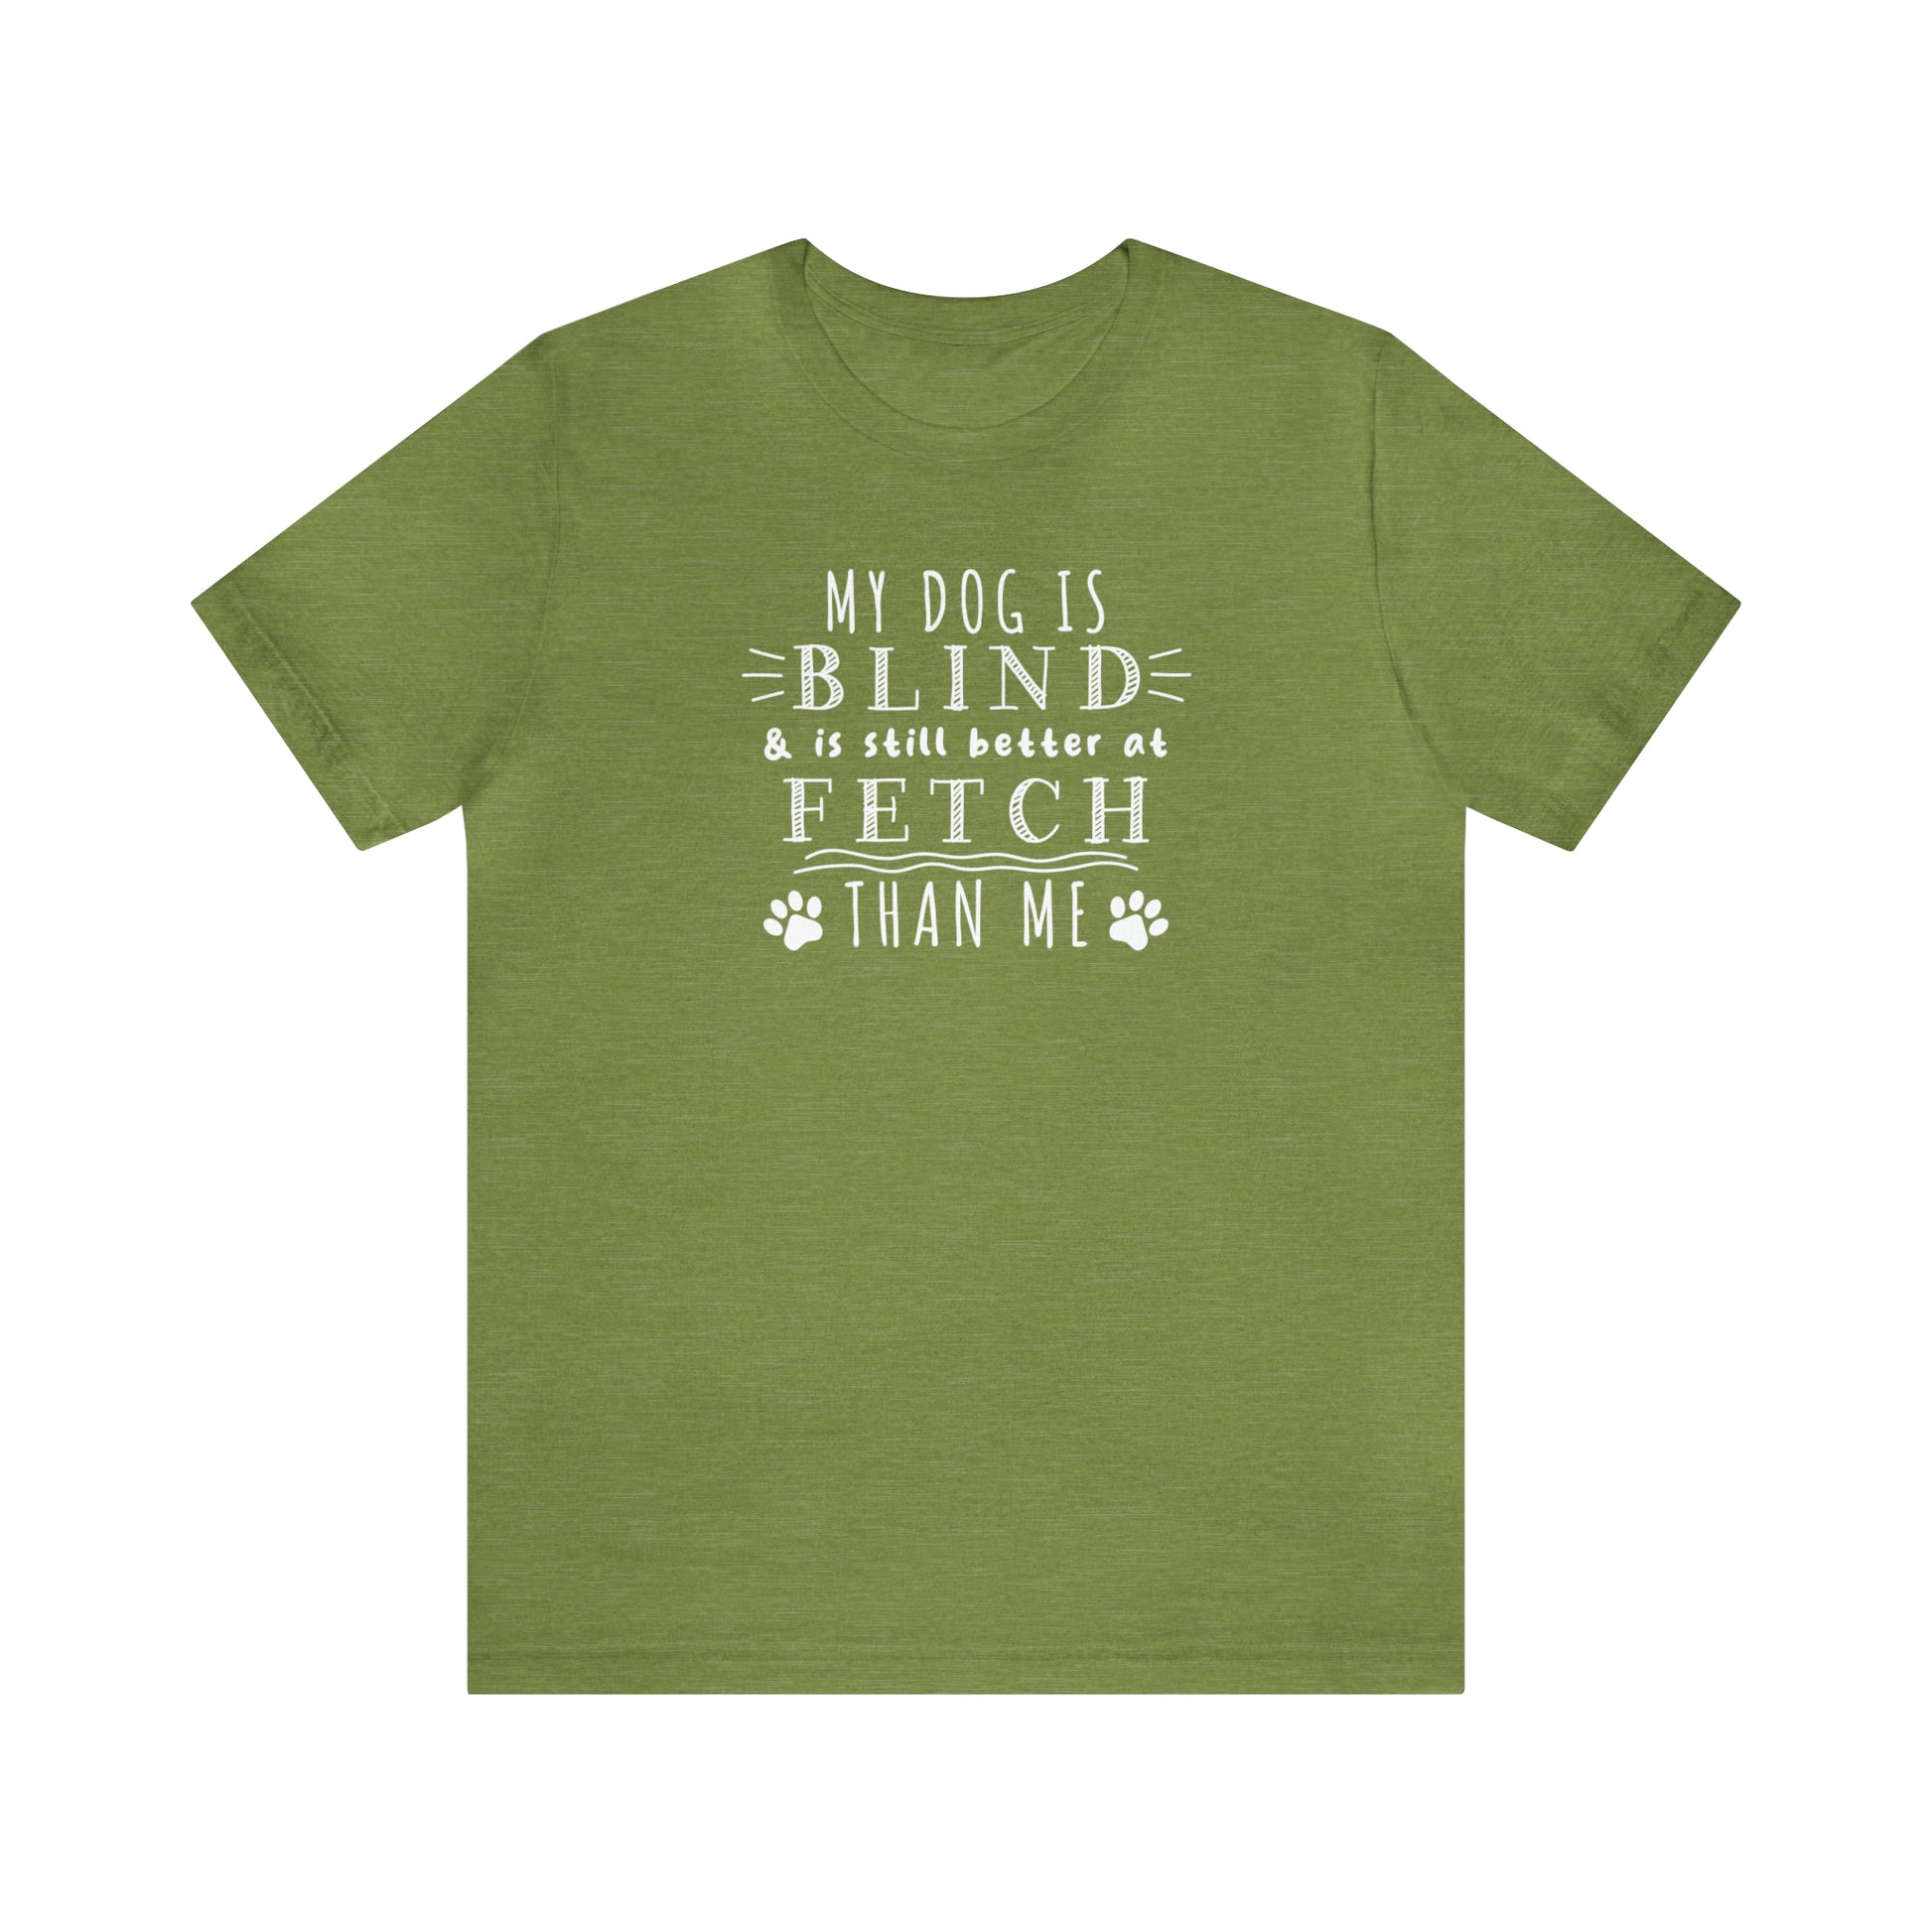 green olive army blind dog fetch funny humorous women men t-shirt unisex short sleeve shirt